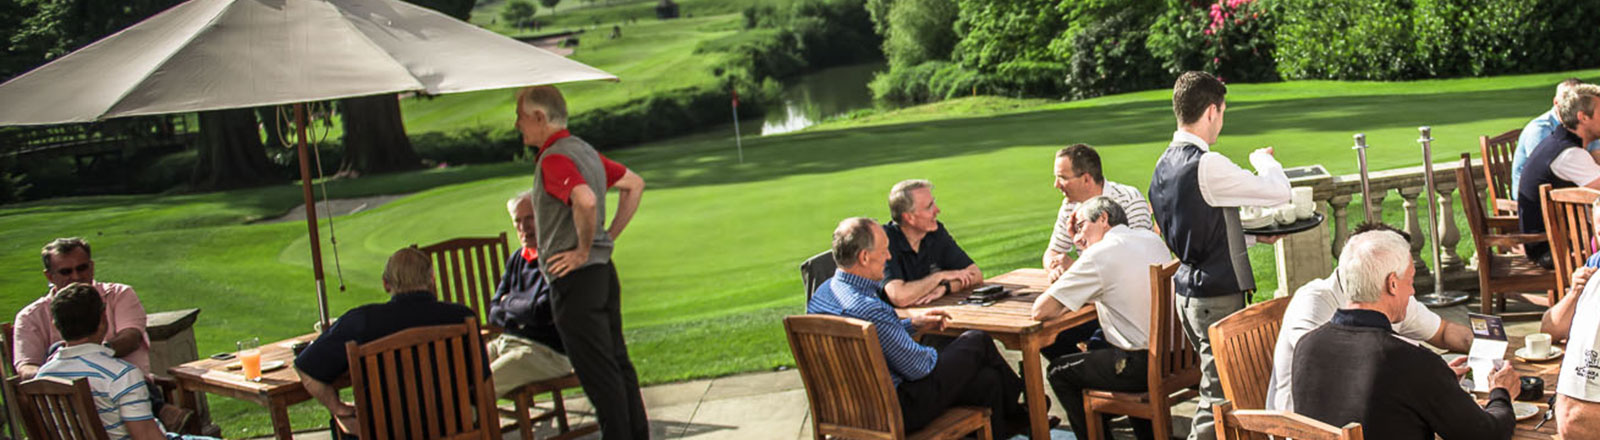 Burhill Golf Club terrace